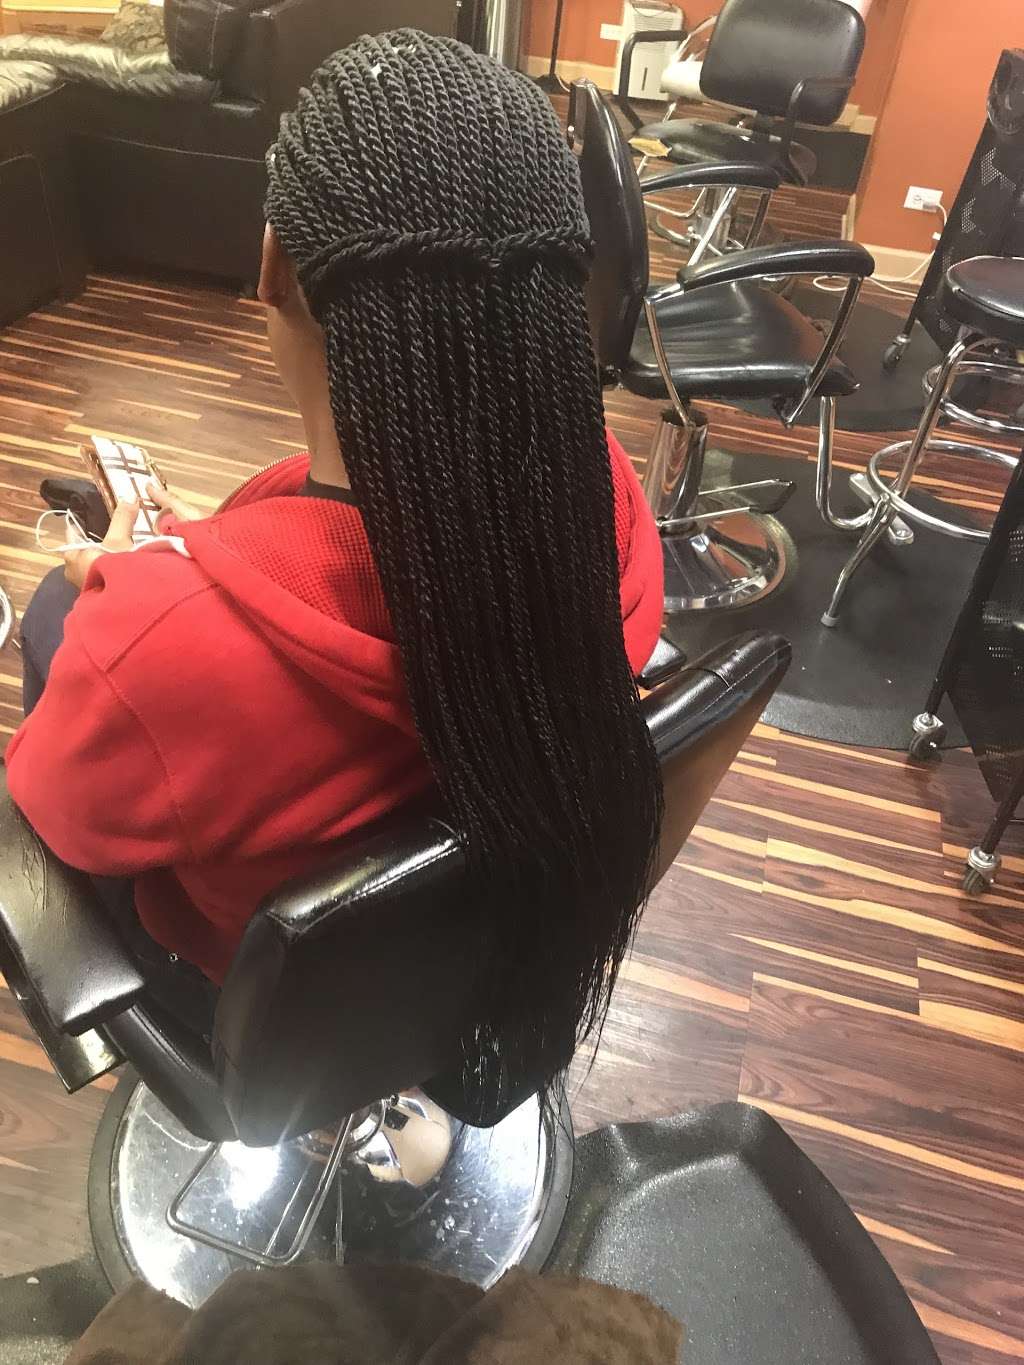 Camara African Hair Braiding 151 S Halsted St Chicago Heights Il 60411 Usa